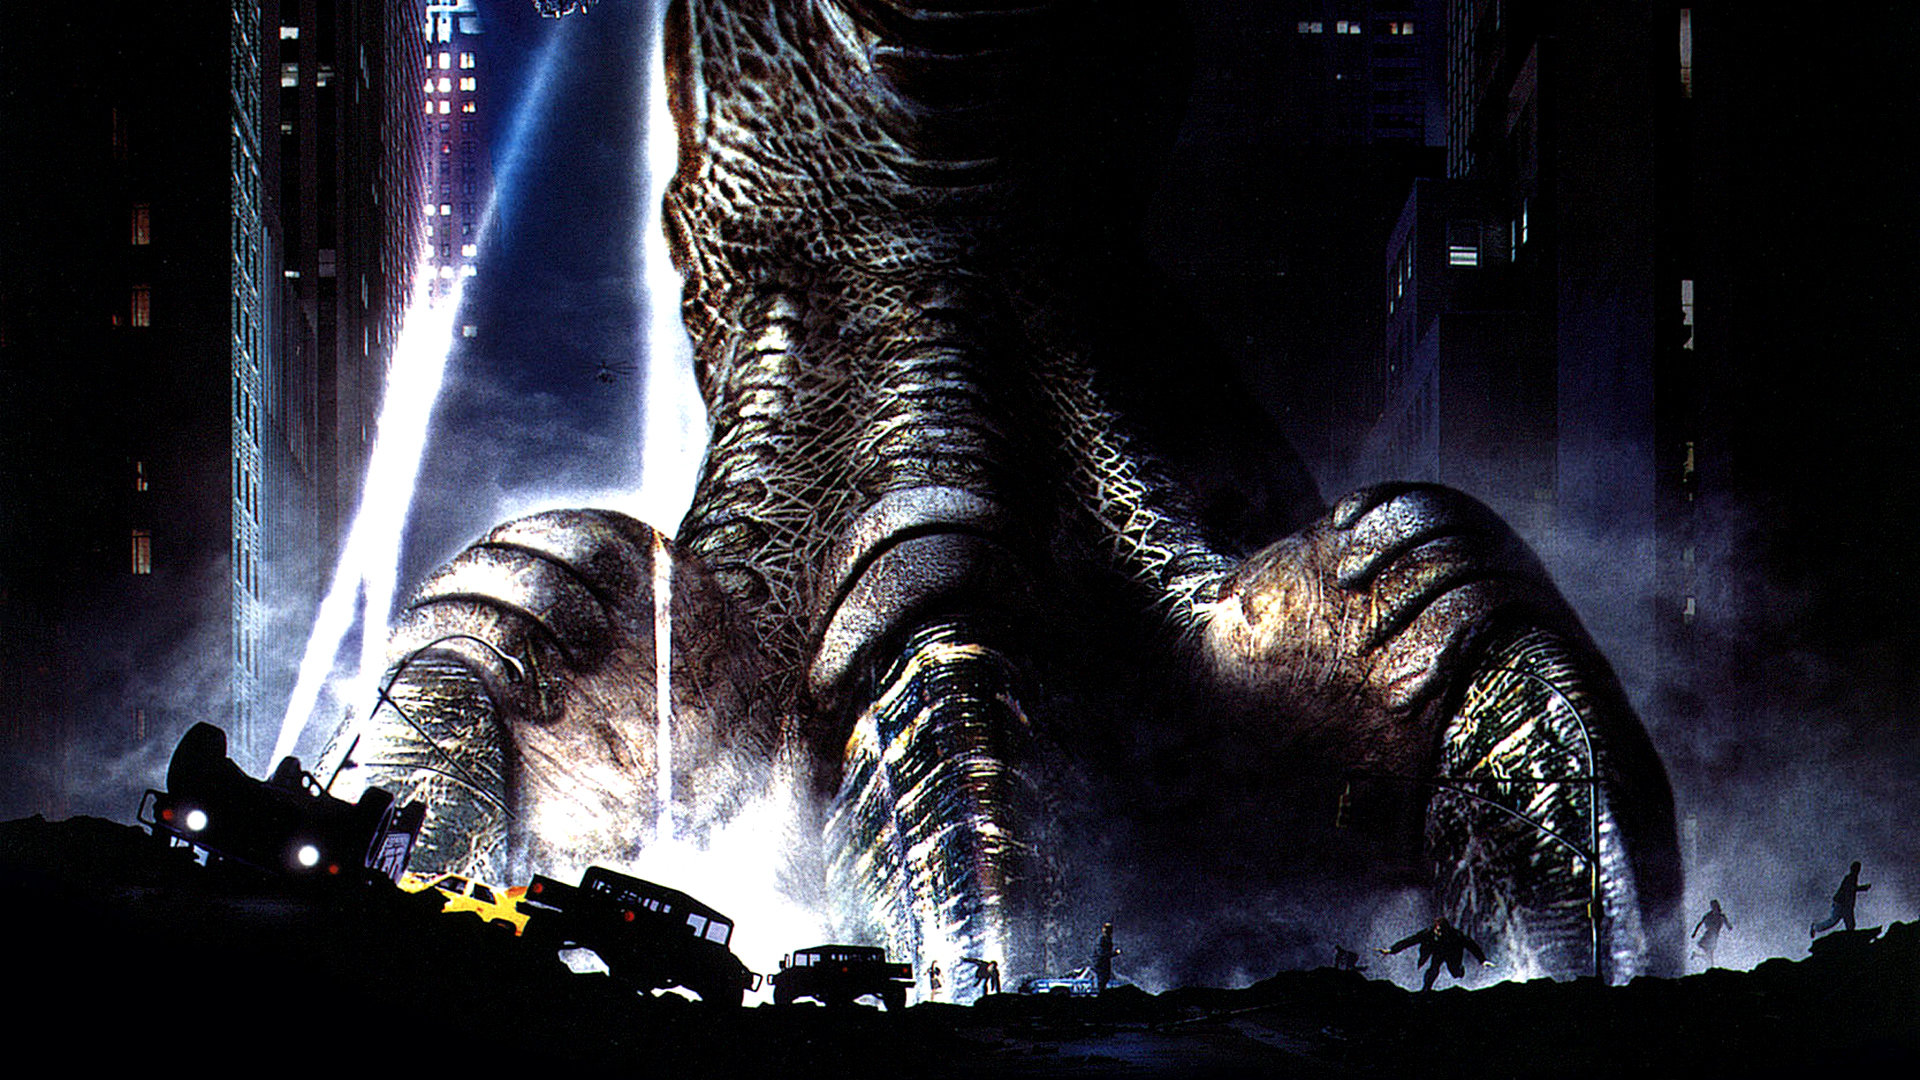 New 'Godzilla' Film Planned For 2012